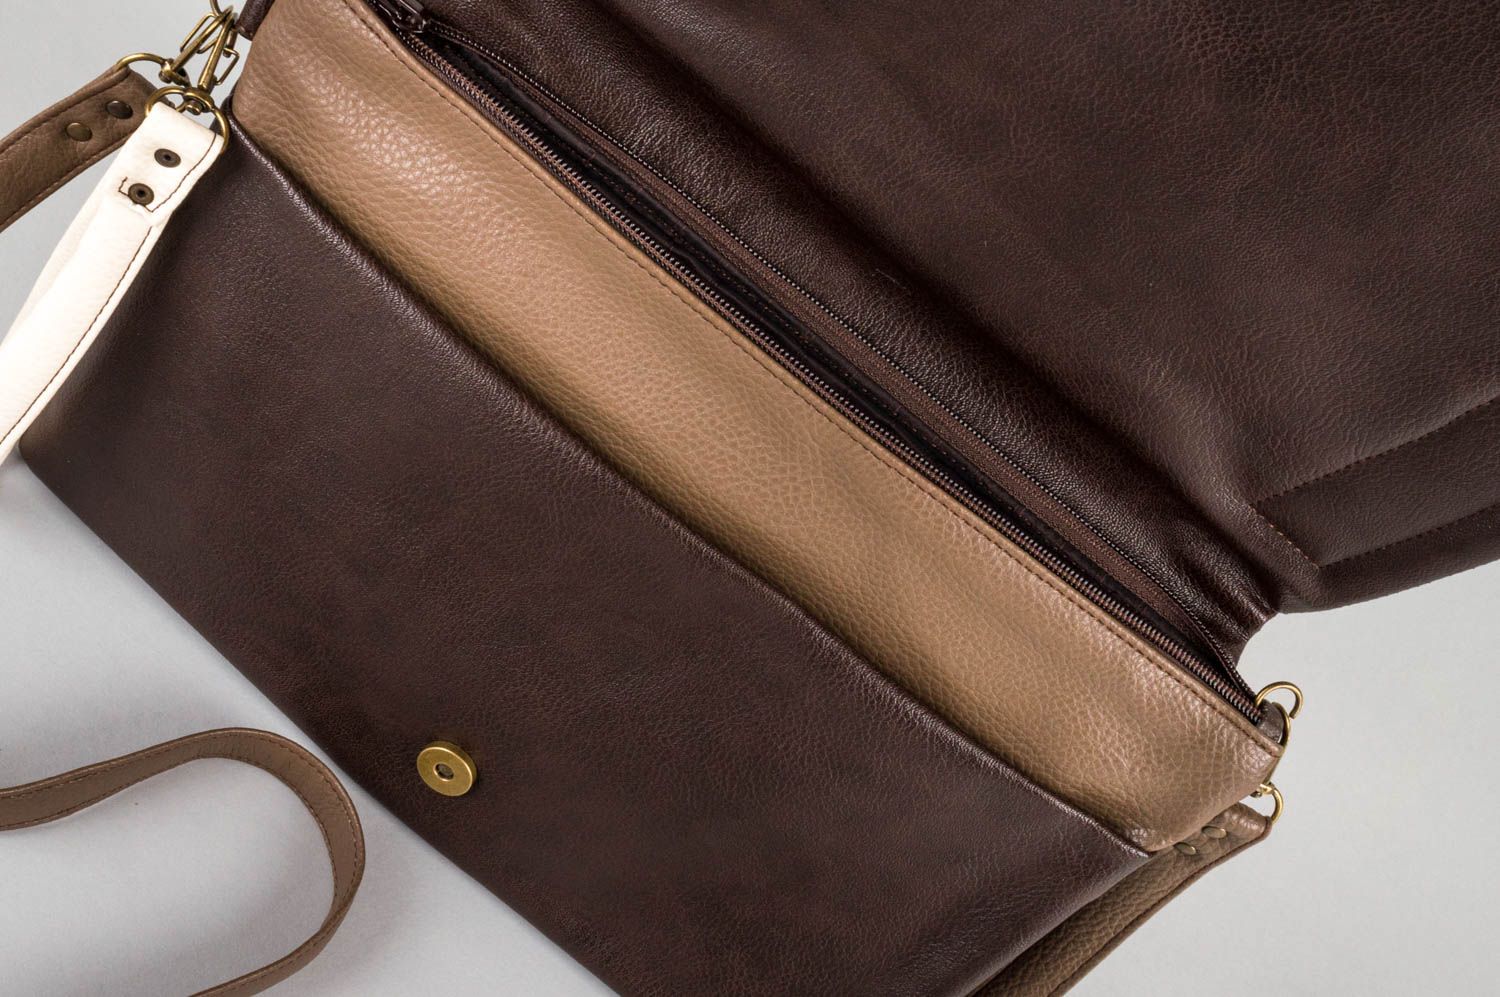 Unusual stylish handmade faux leather shoulder bag fashion accessories gift idea photo 3